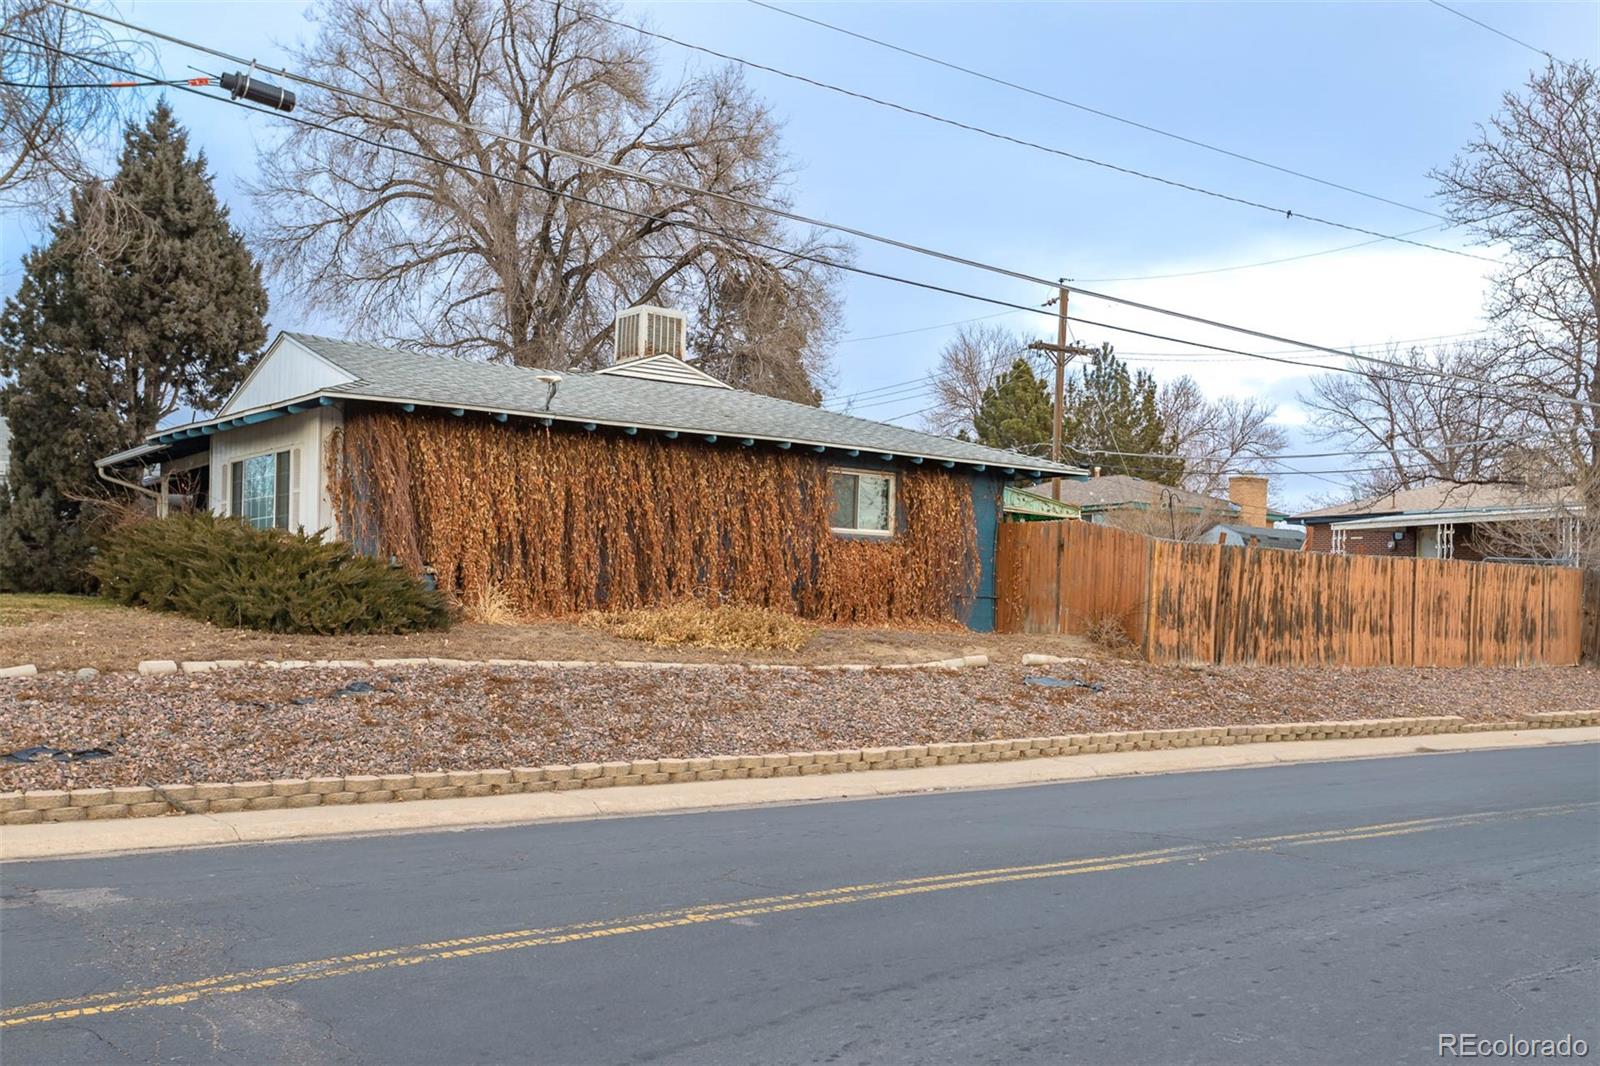 8420  clarkson street, Denver sold home. Closed on 2024-02-23 for $360,000.